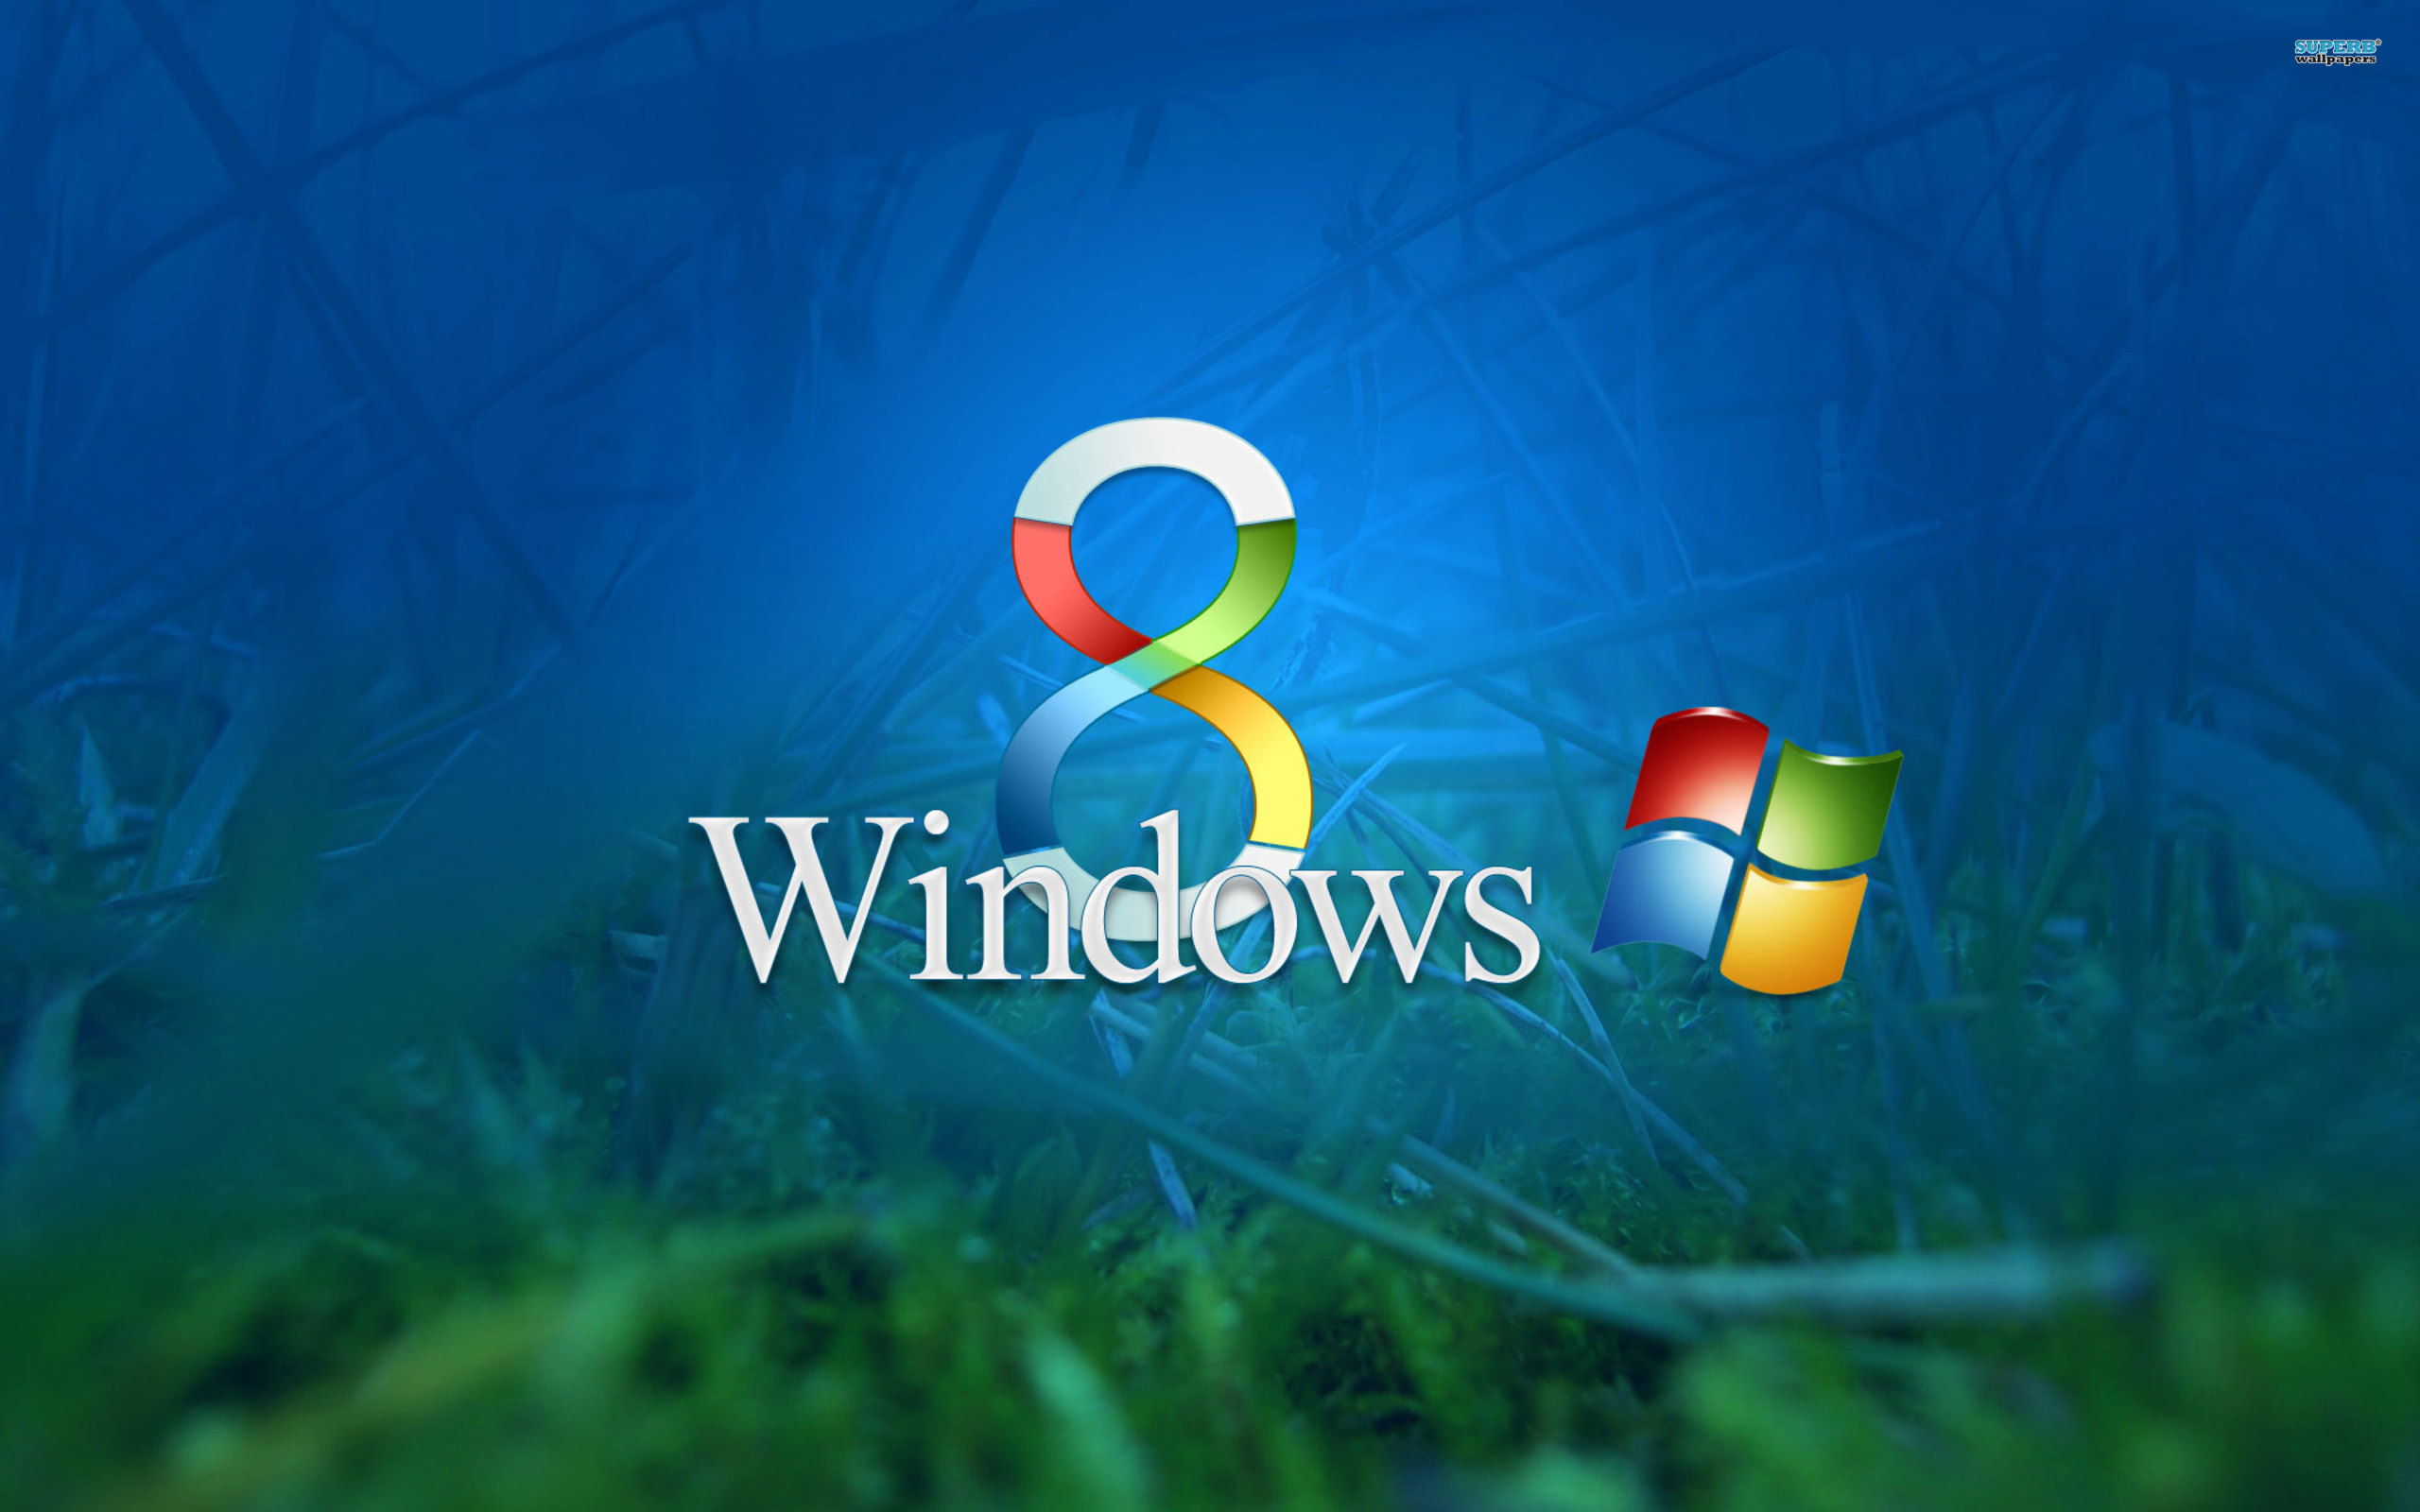 windows, windows 8, technology, microsoft